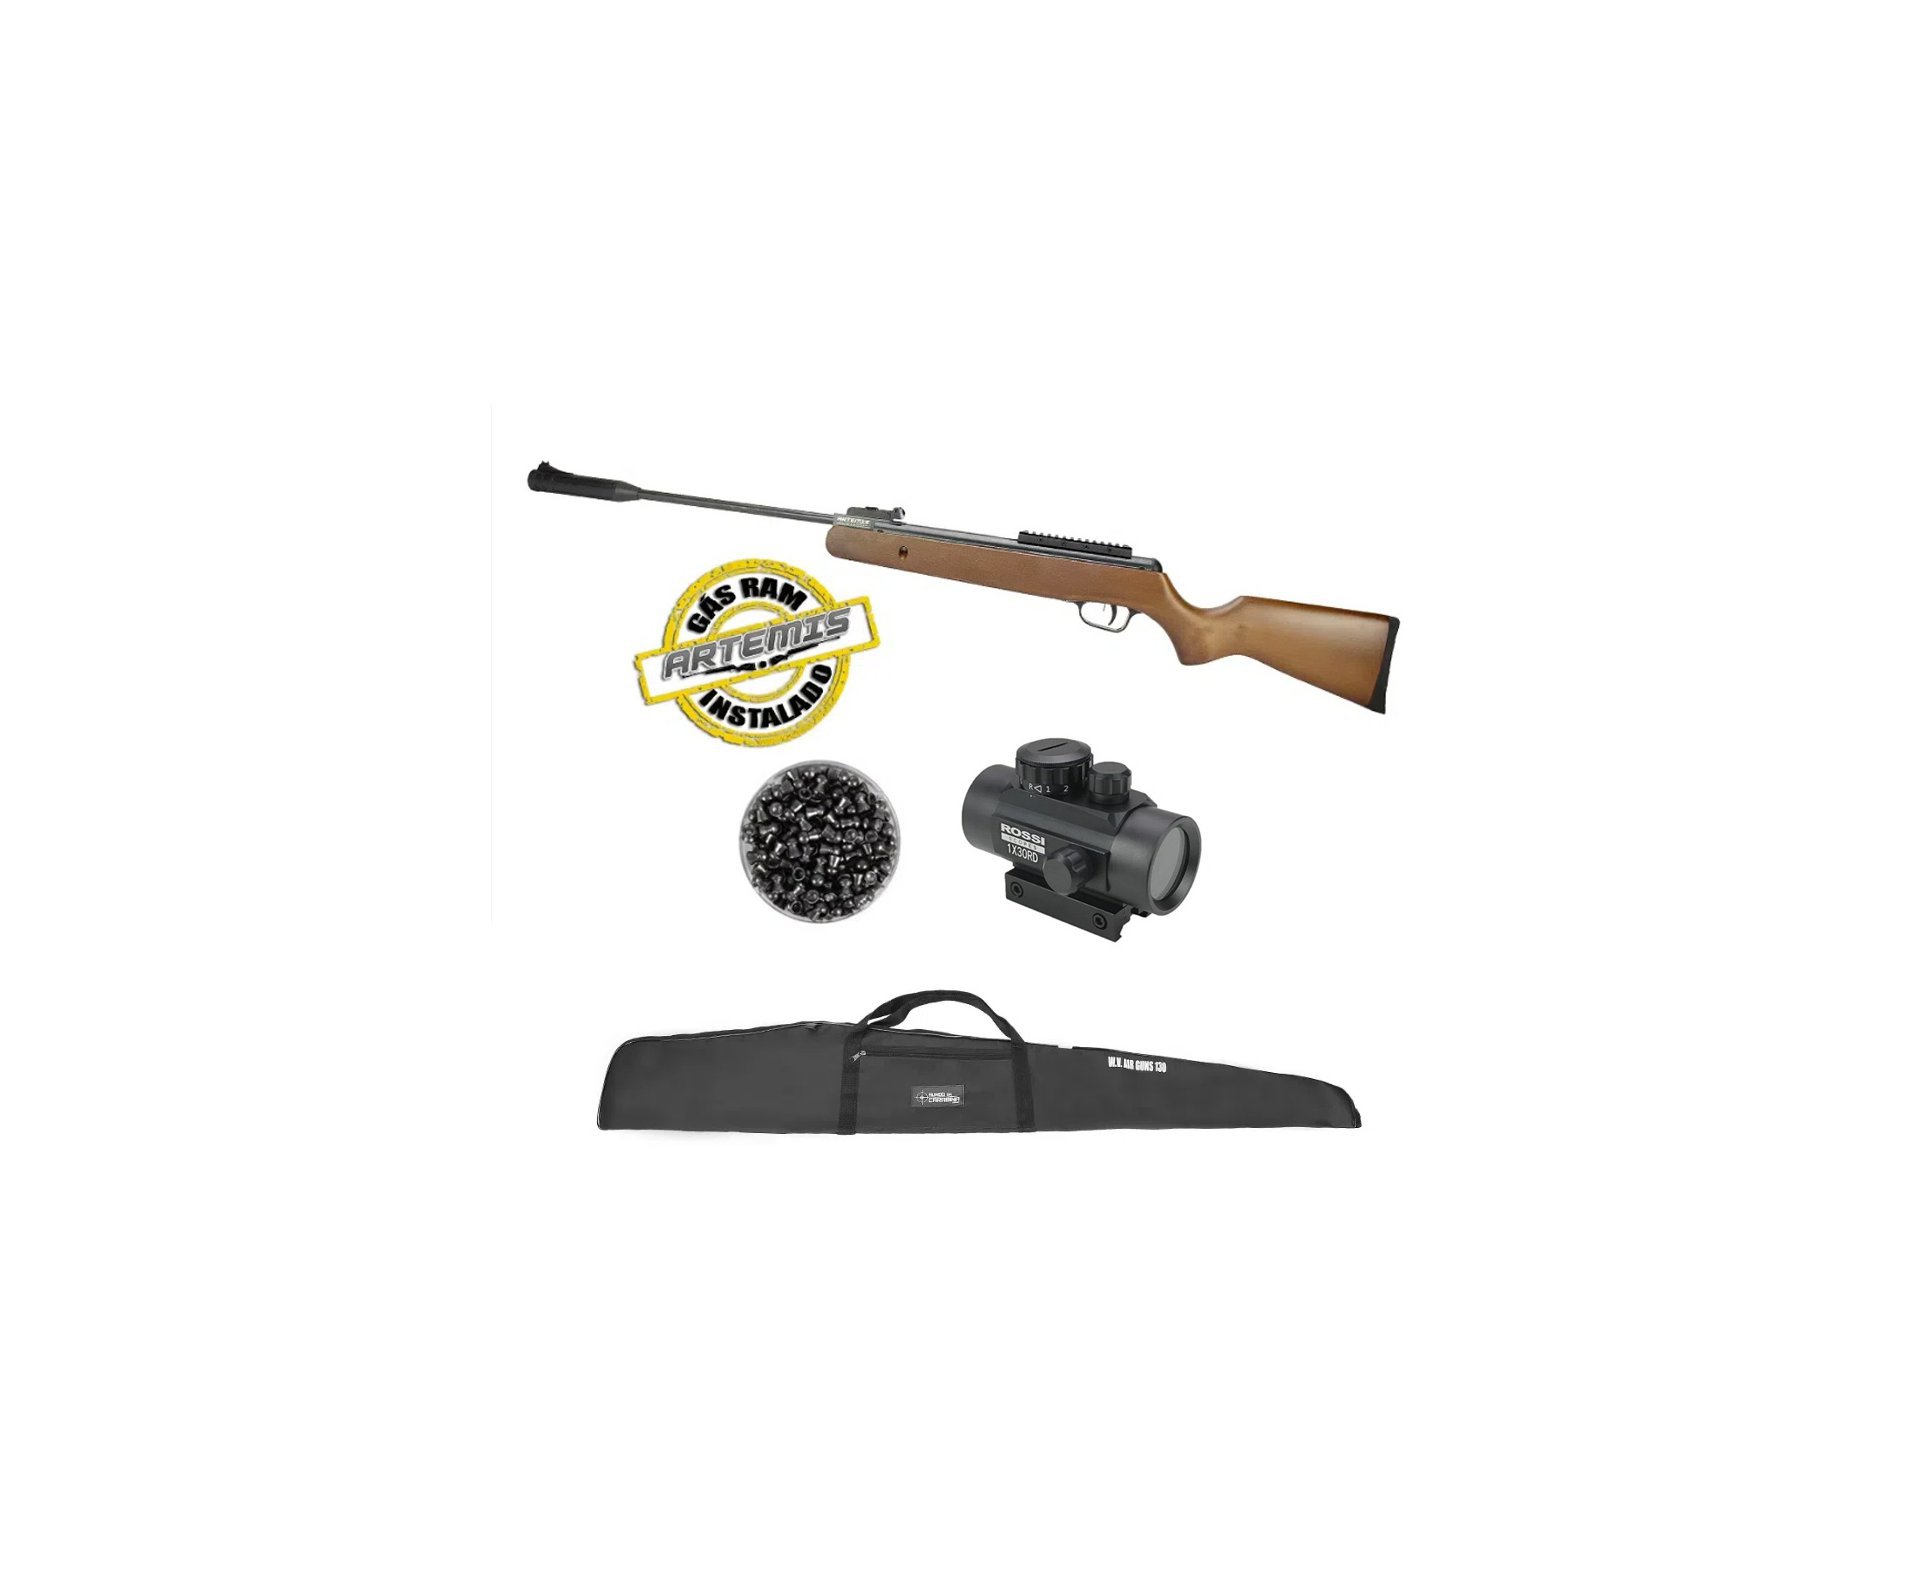 Carabina De Pressão Black Hawk Wood Edition Gas Ram 70kg 4.5mm Artemis + Red Dot + Chumbinho + capa